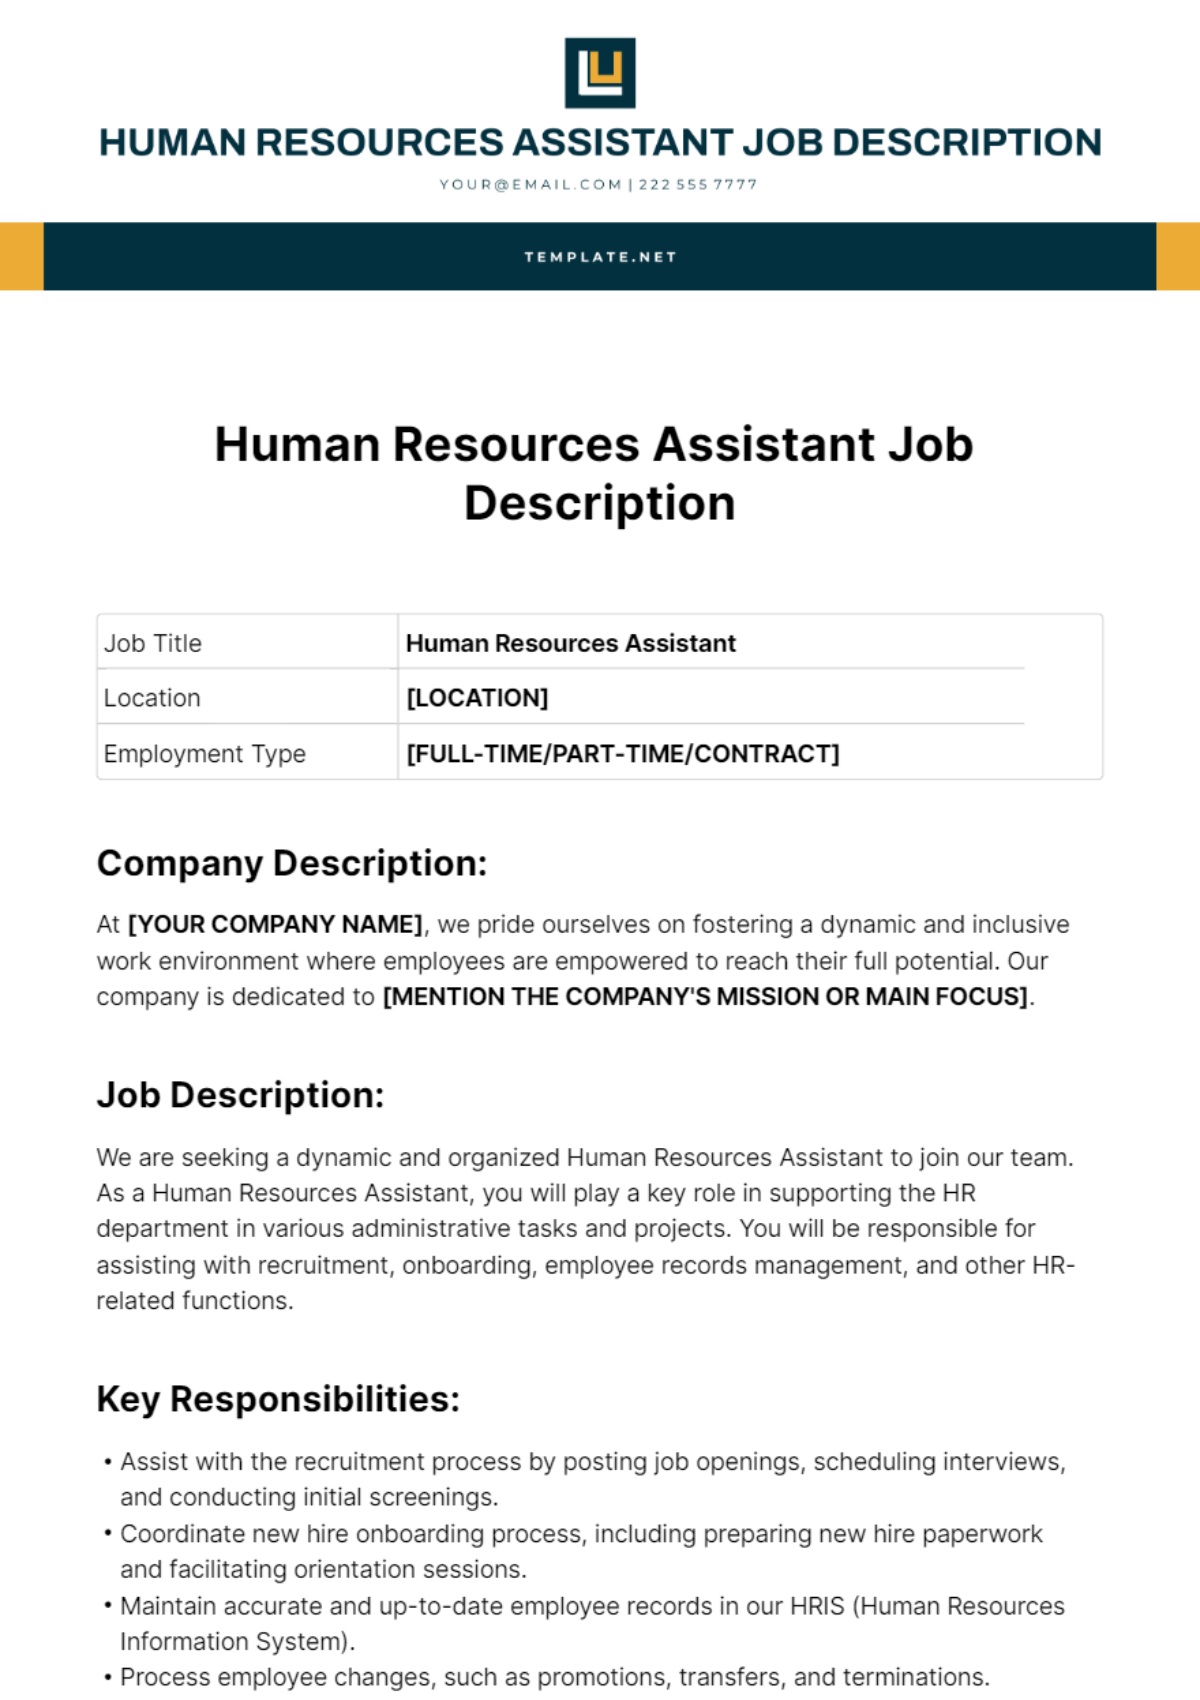 Free Human Resources Assistant Job Description Template